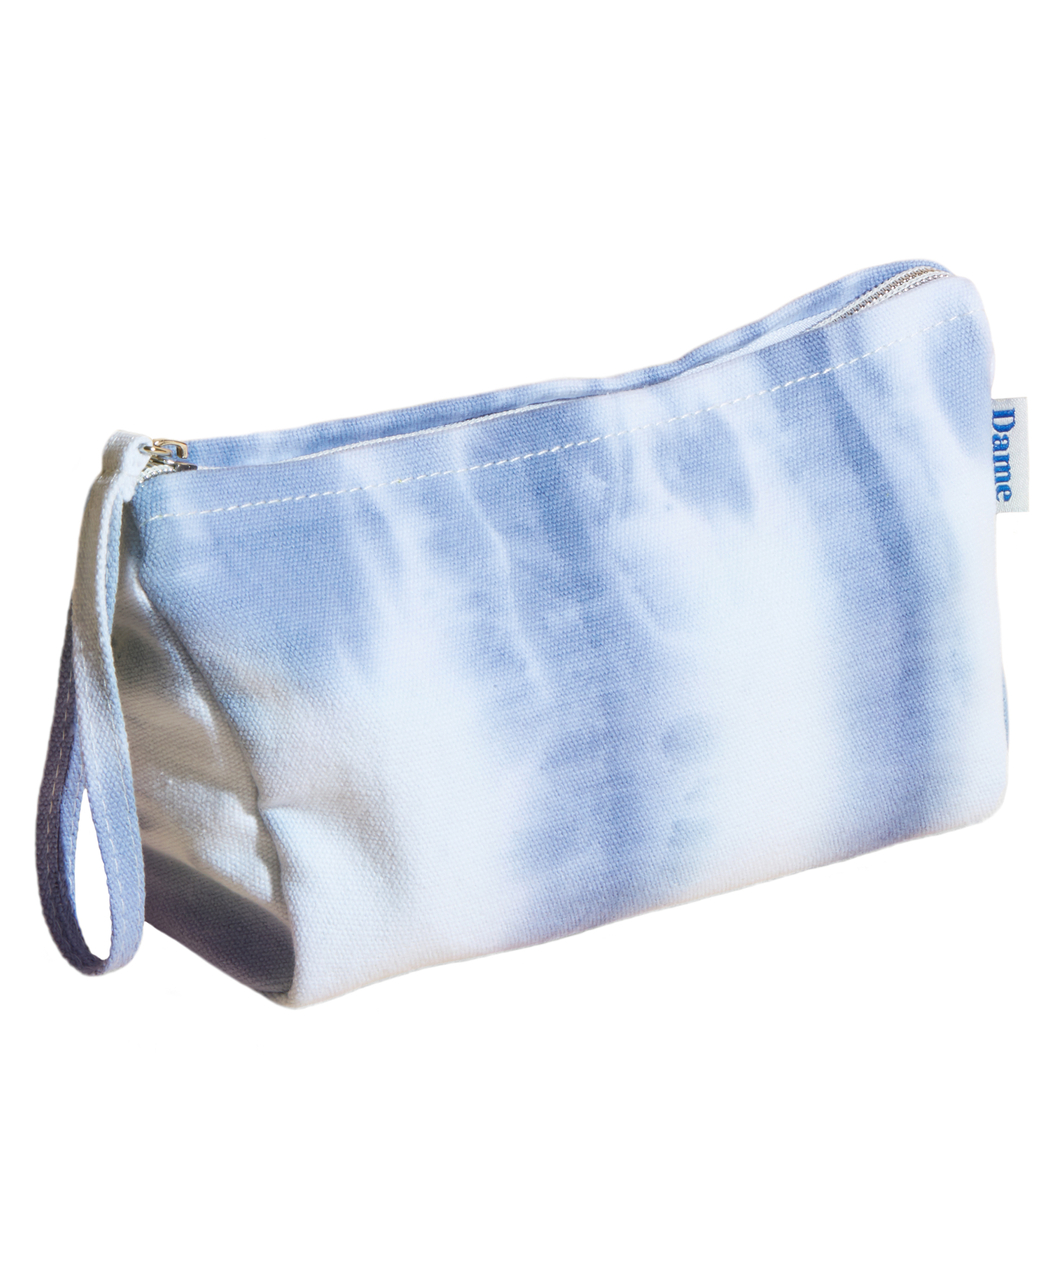 Dame Products Stash джинсовая сумочка с застежкой-молнией